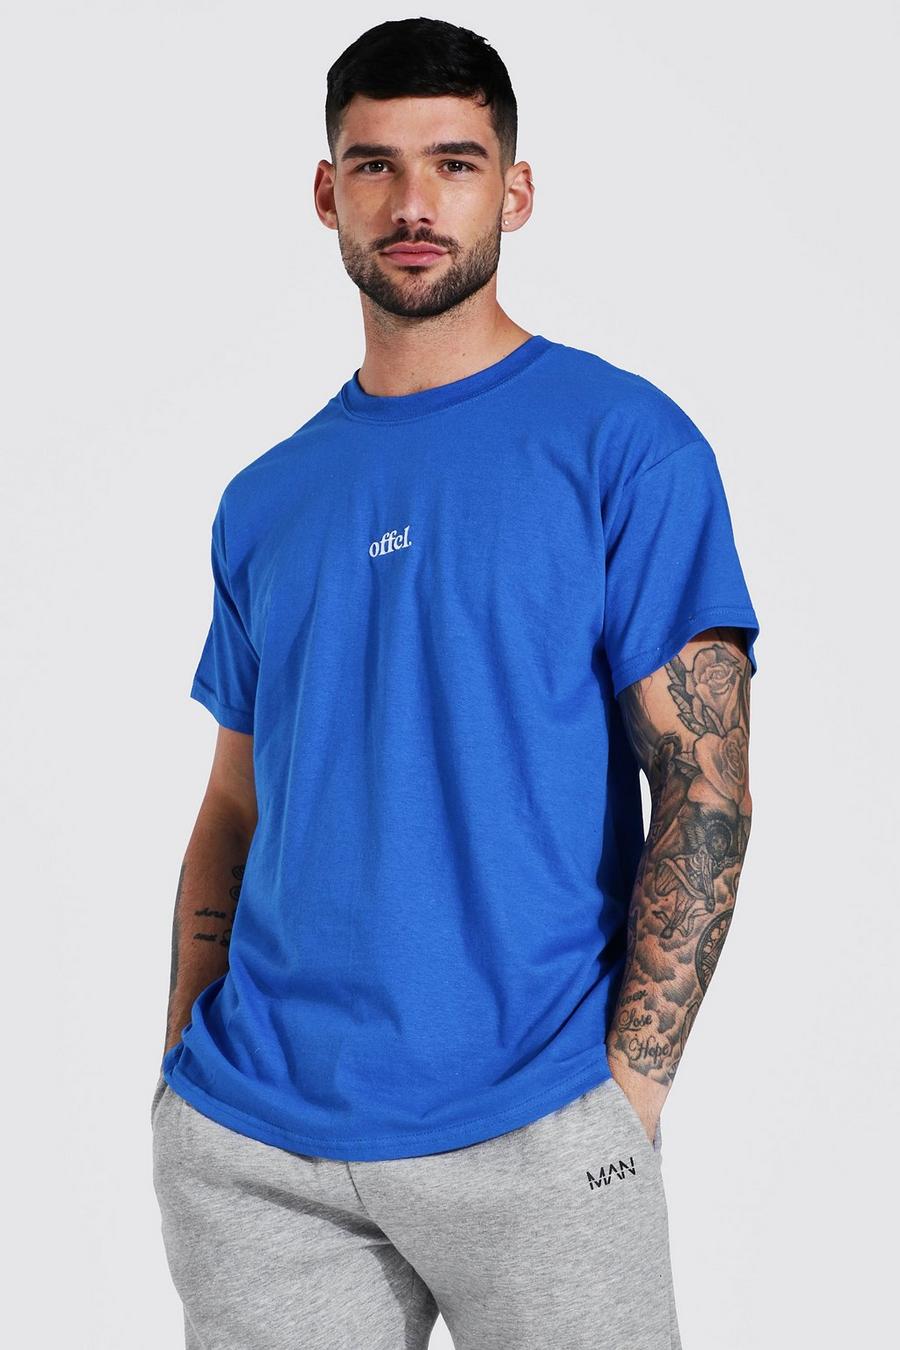 T-shirt brodé - Offcl, Cobalt blau image number 1